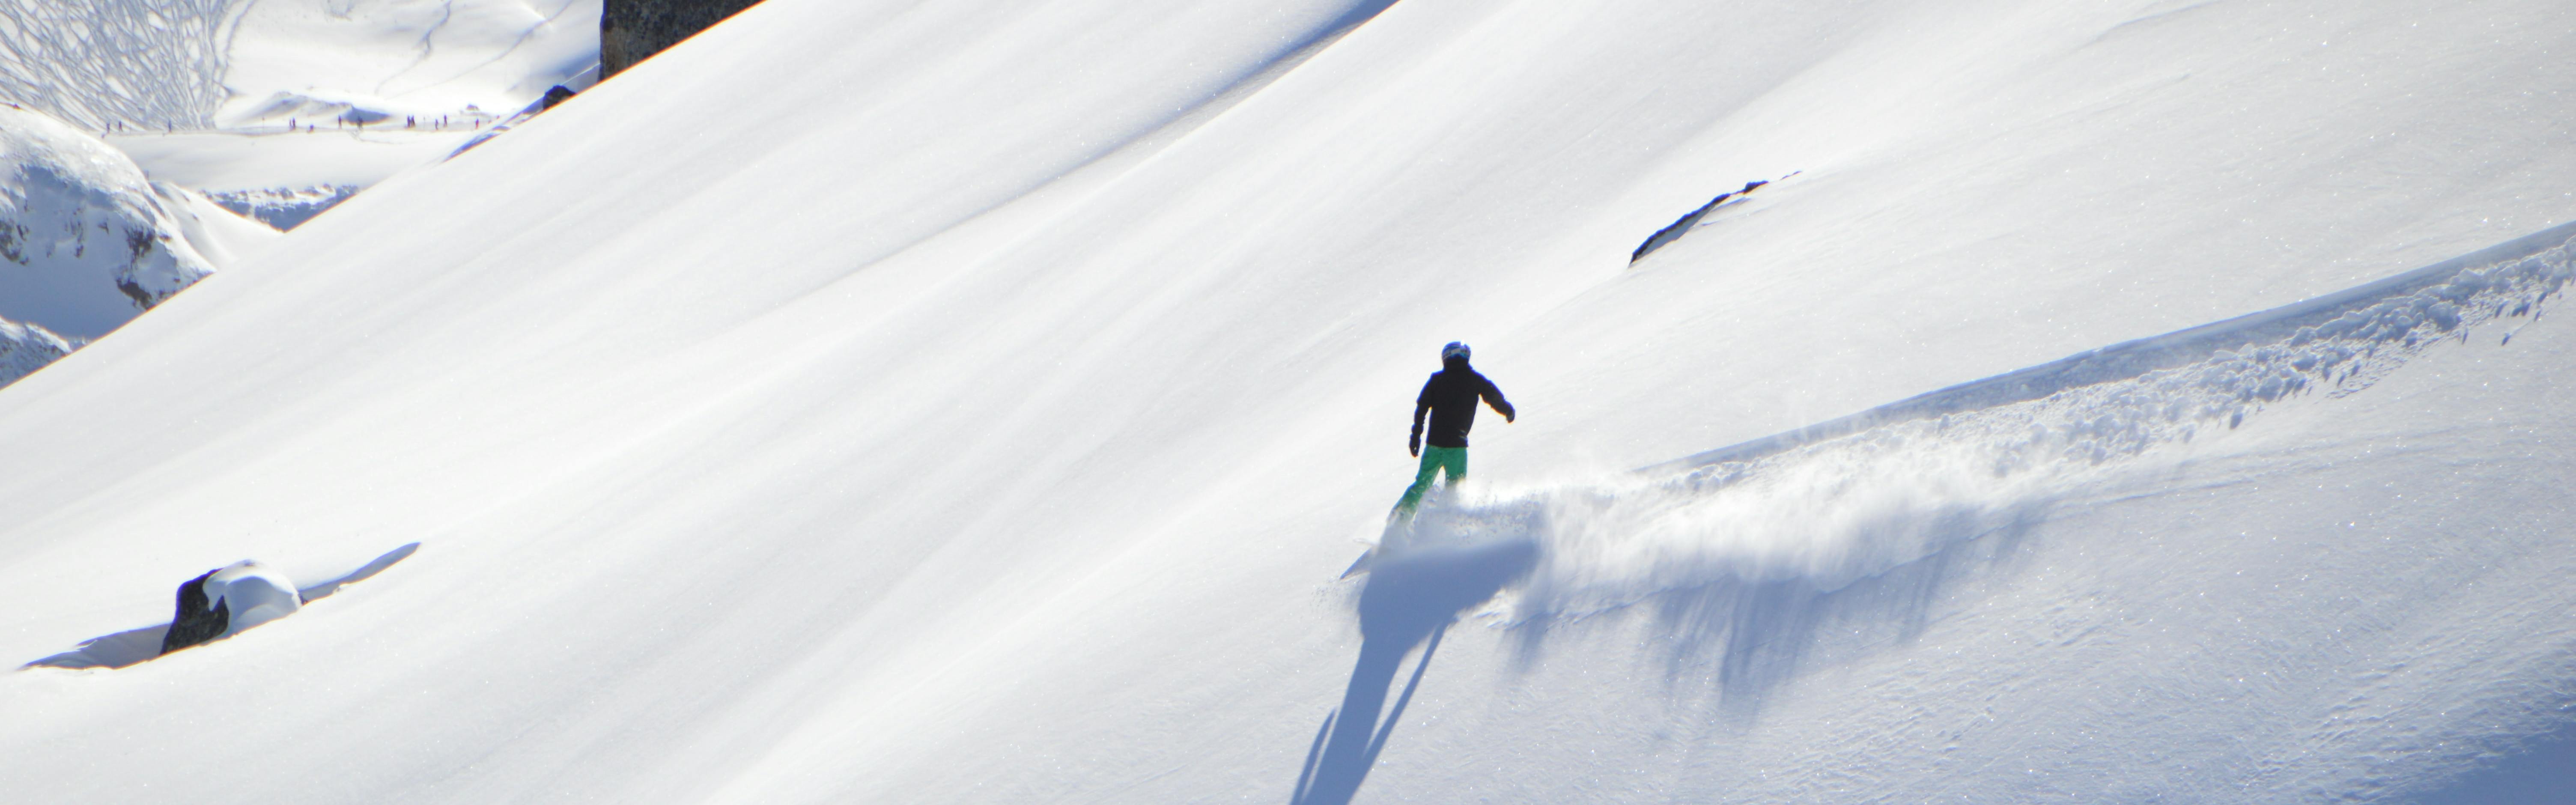 A snowboarder rides across a powdery mountain. 